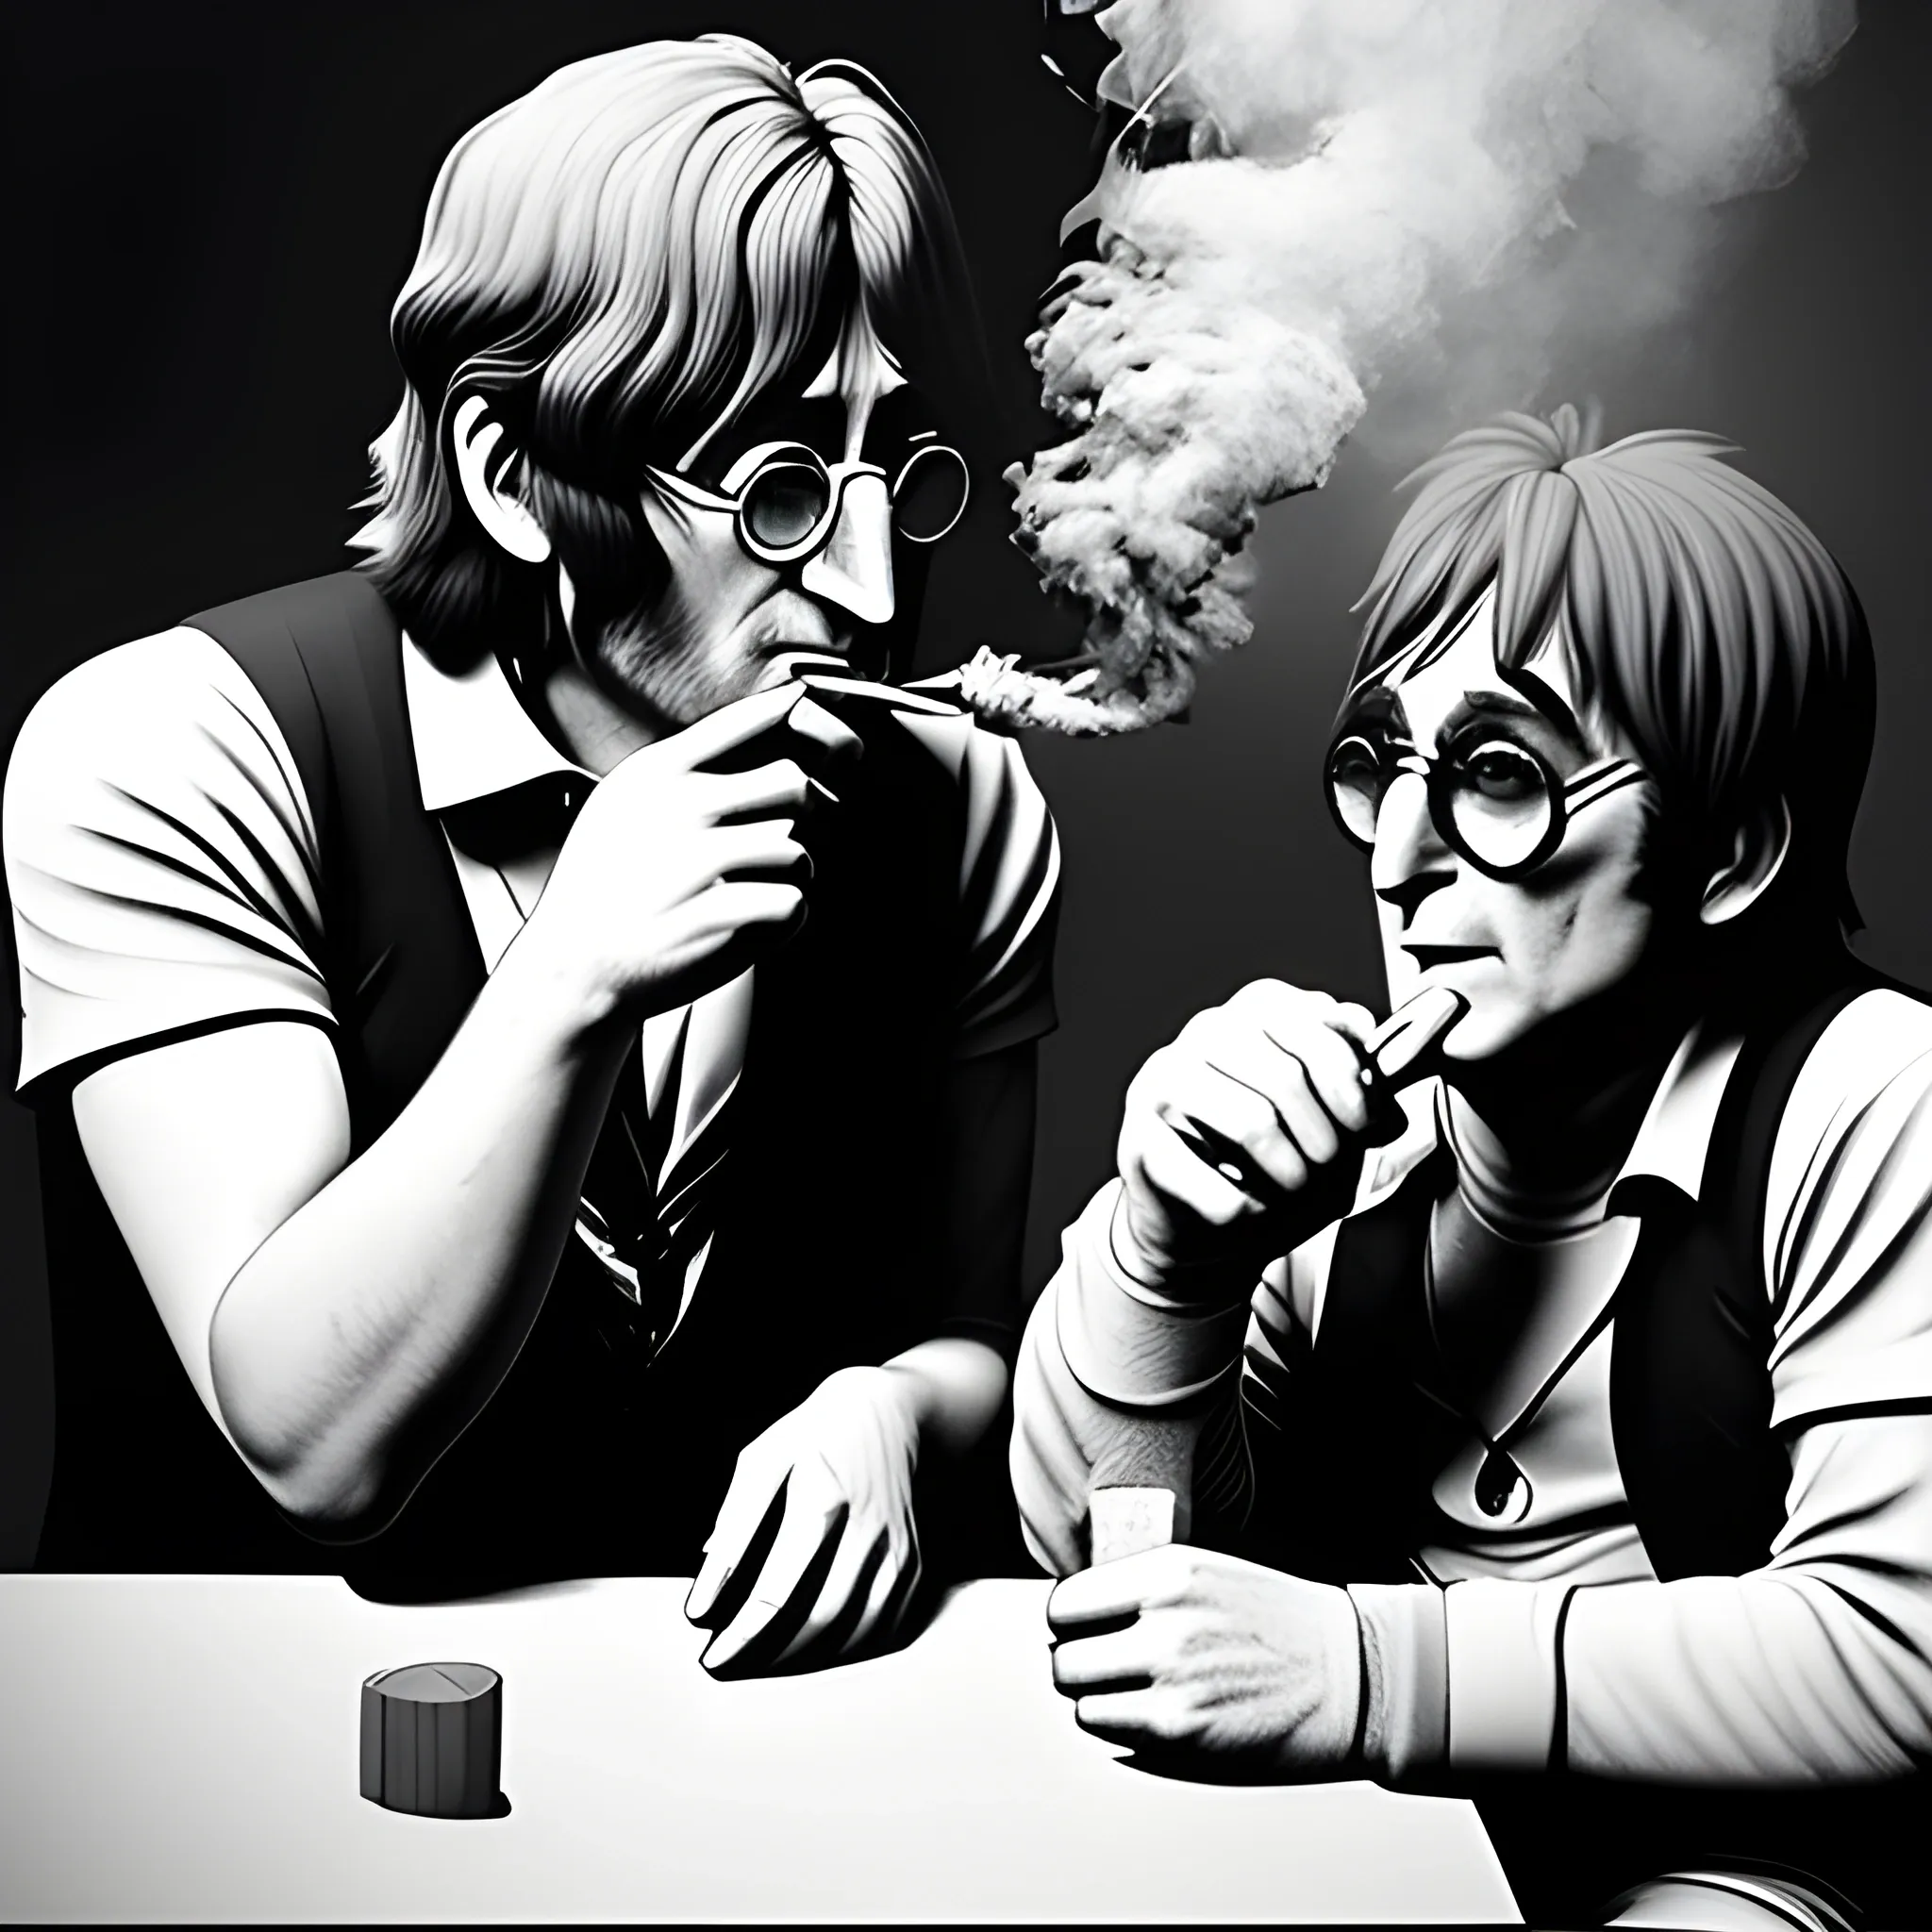 John Lennon & Knuckles smoking a joint, 3D